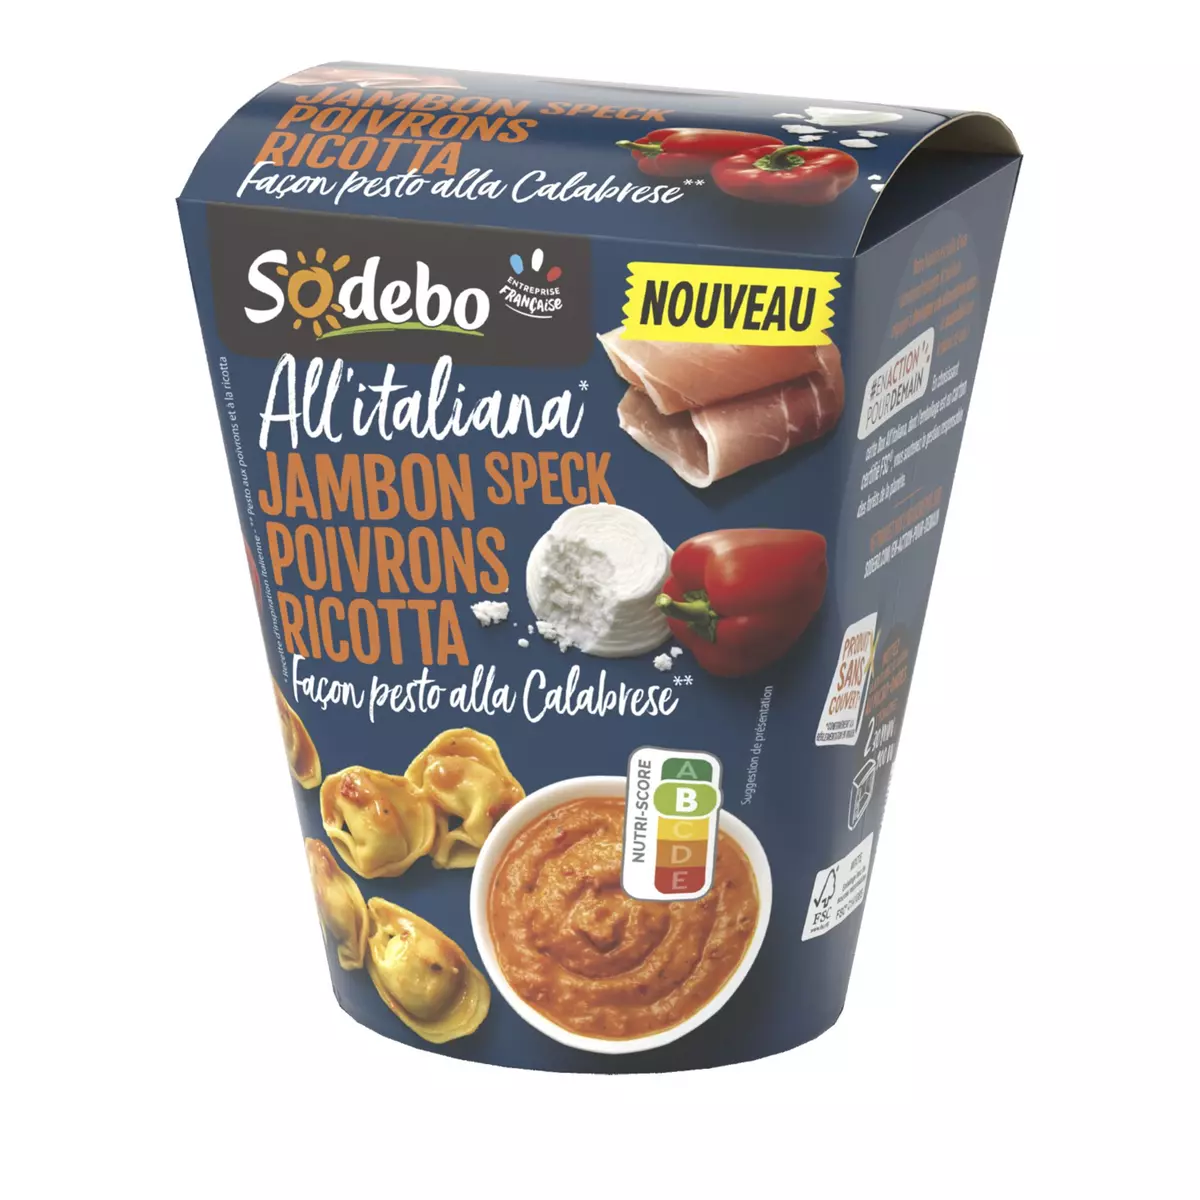 SODEBO Pasta box all'italiana jambon speck poivrons ricotta 310g